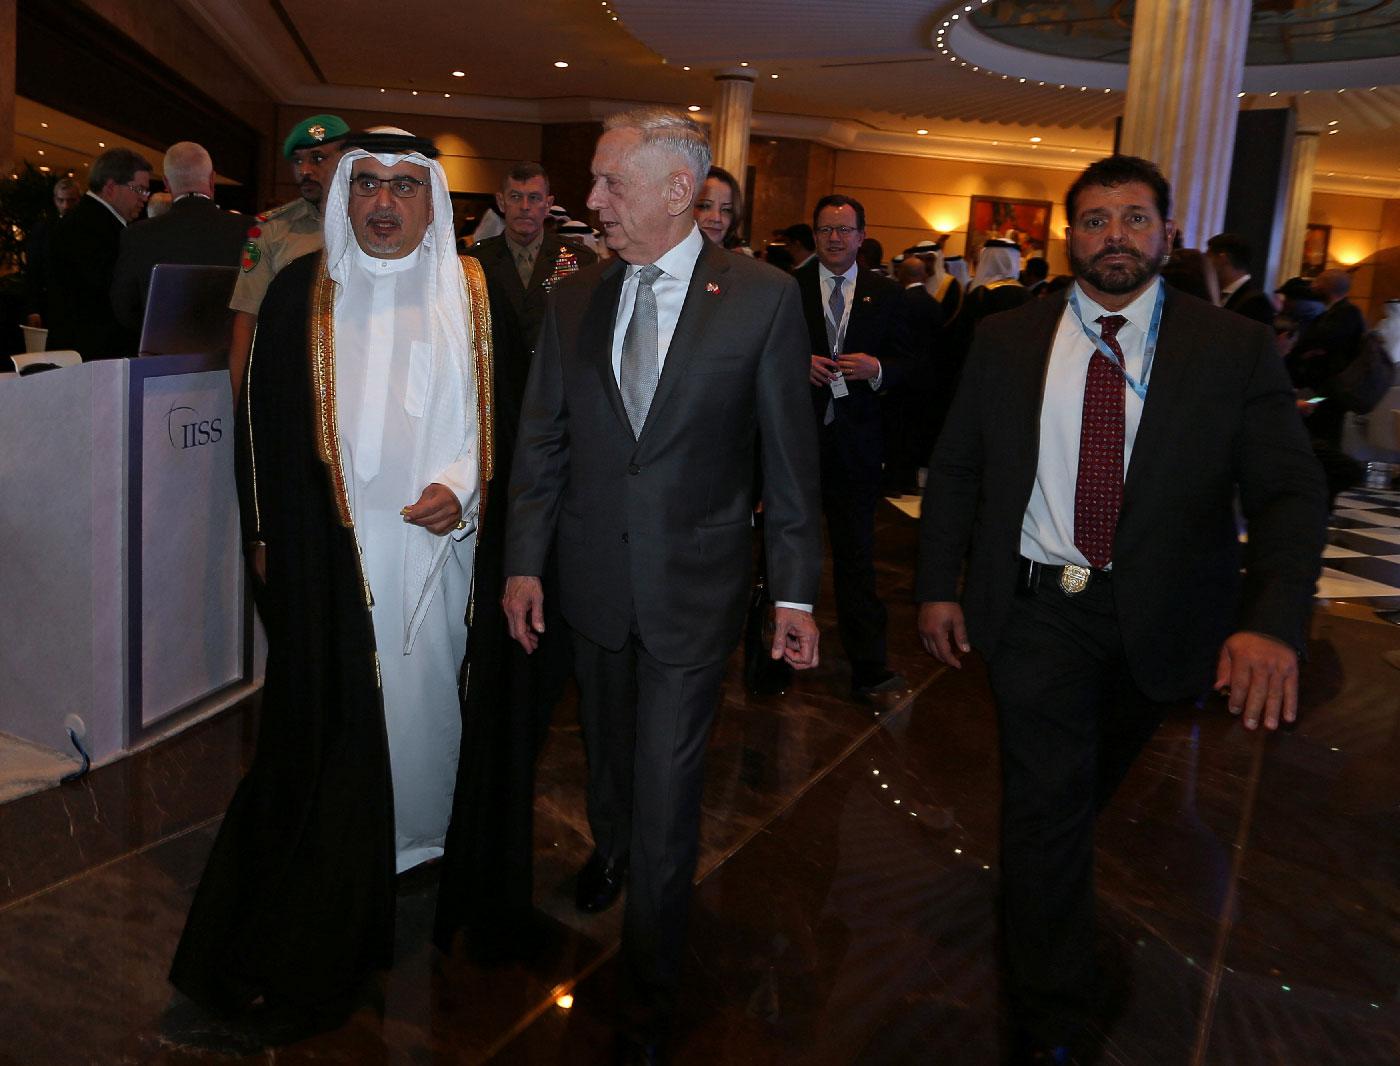 Bahrain's Crown Prince Salman bin Hamad al-Khalifa walks with the US Defense Secretary James Mattis at the inauguration of the 14th regional security summit "The Manama Dialogue" in Manama, Bahrain October 26, 2018.